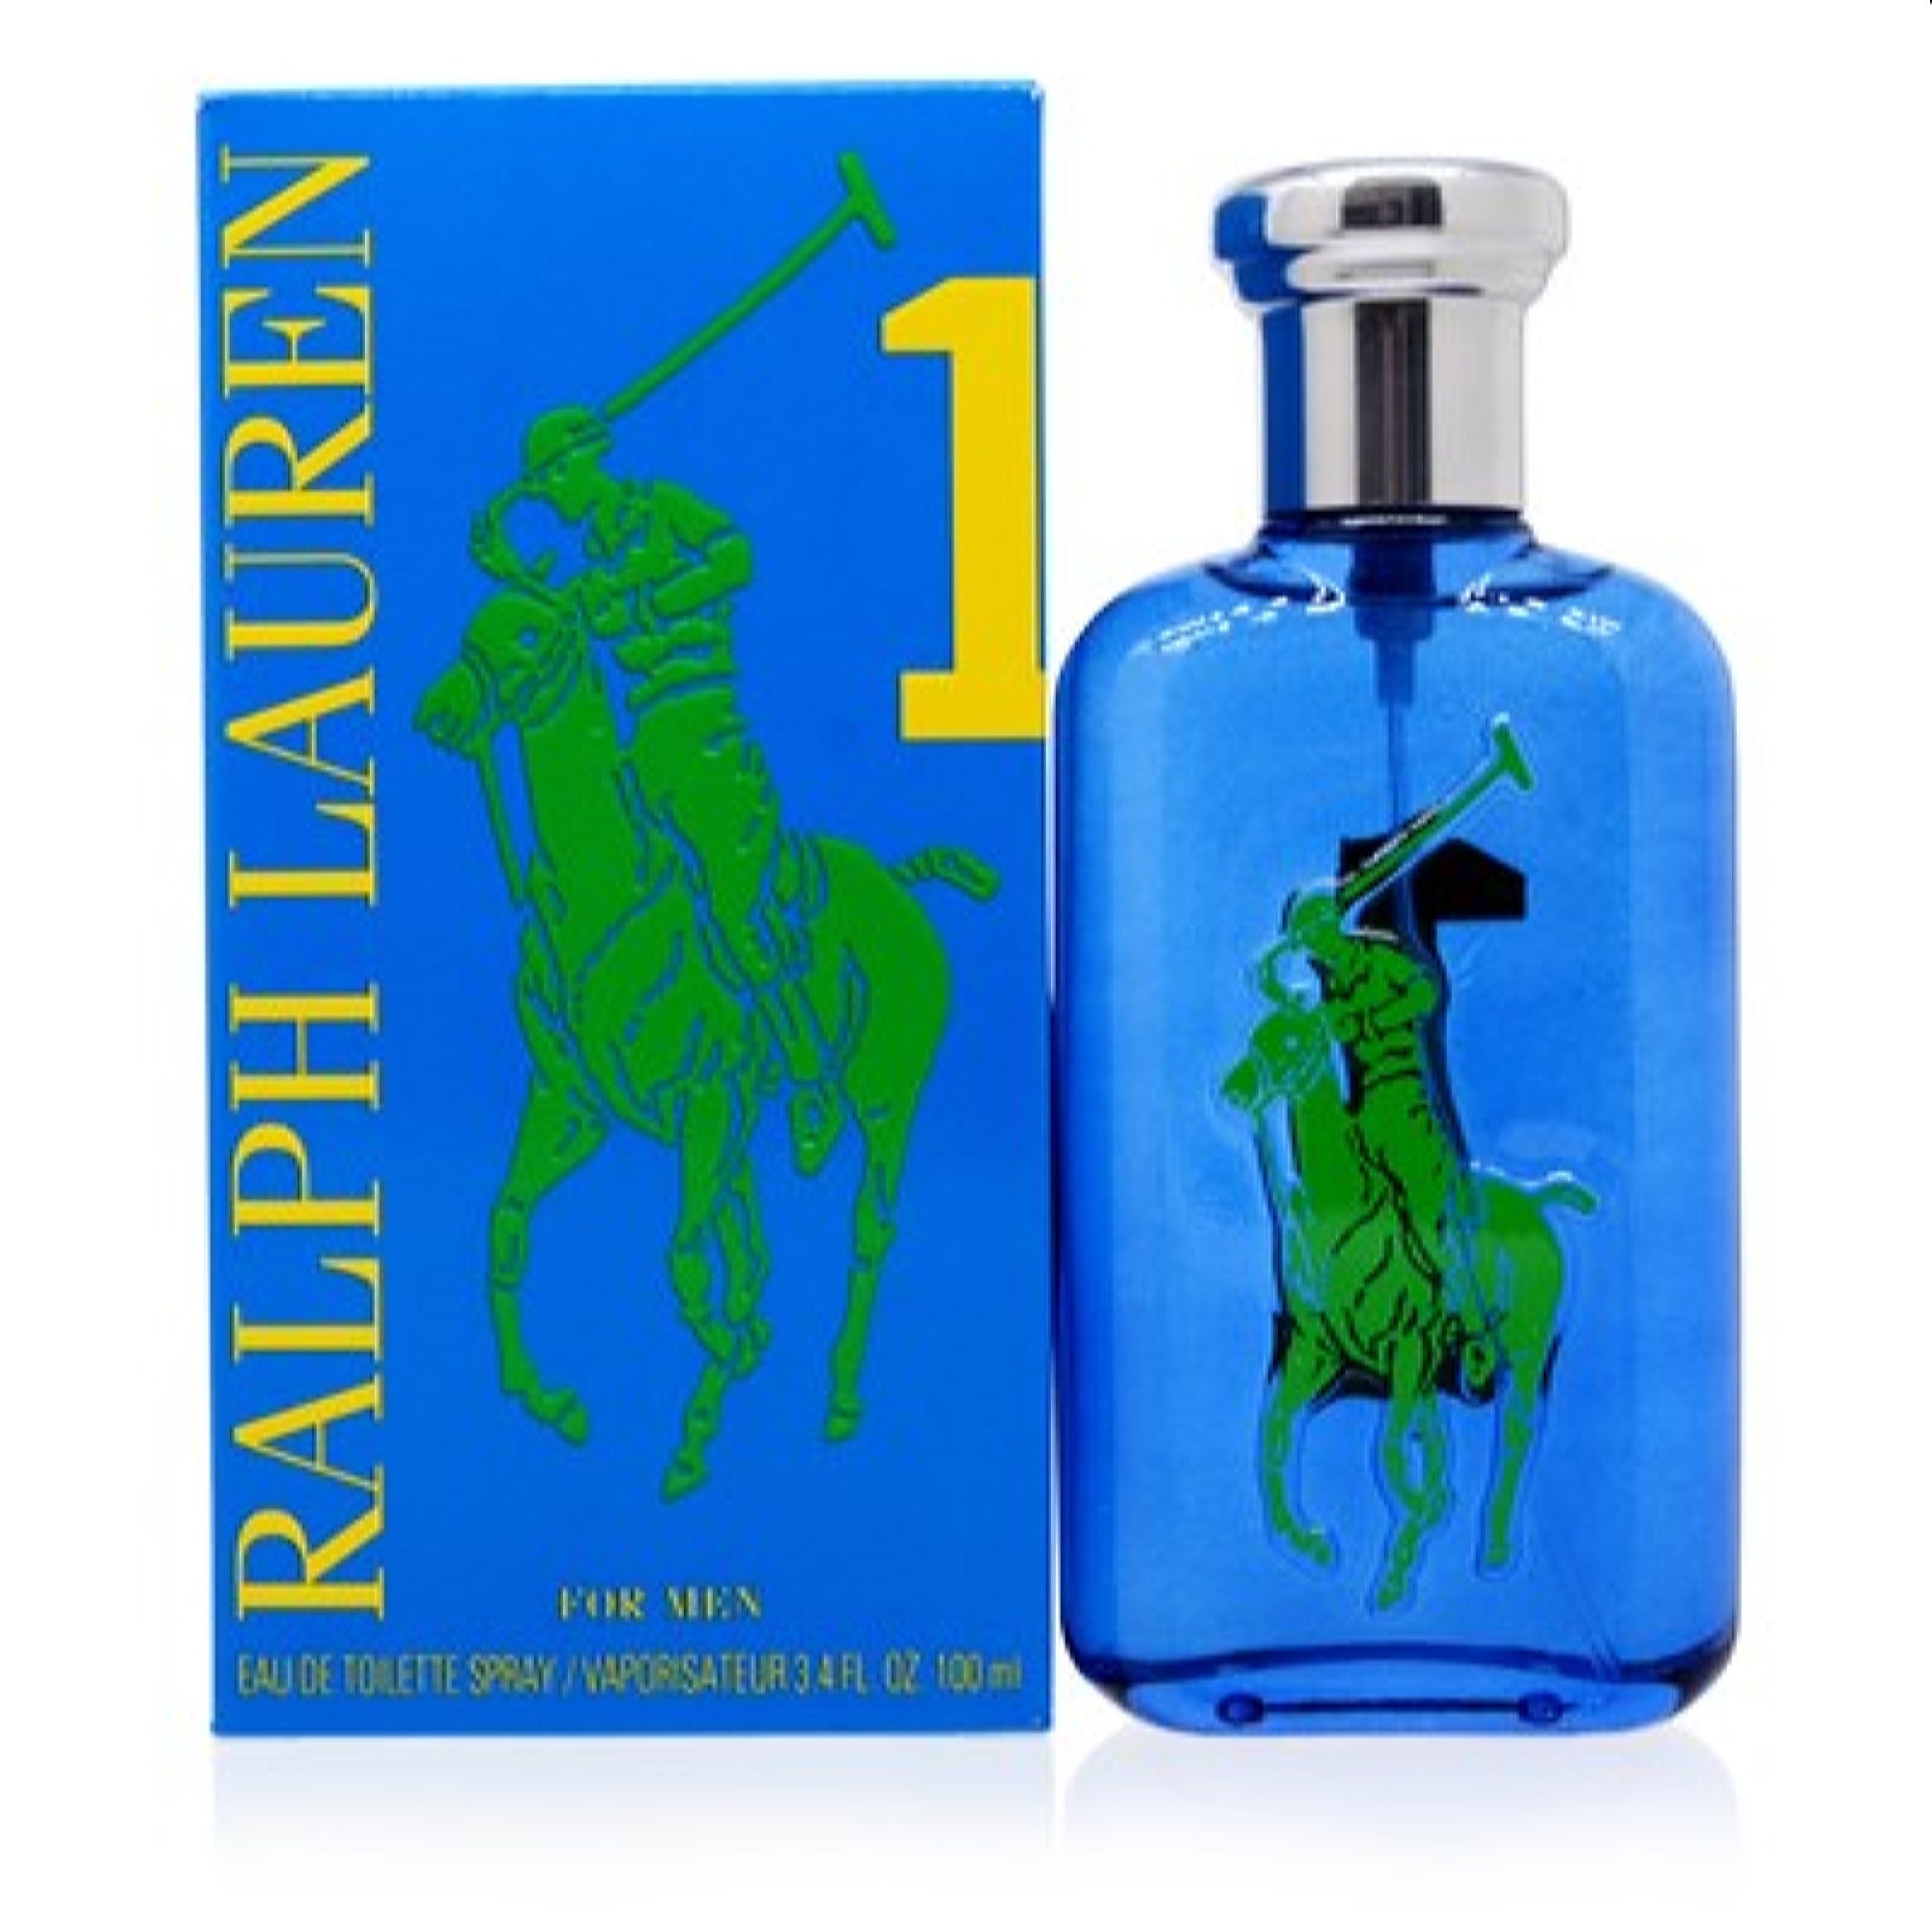 Polo for Men by Ralph Lauren Eau de Toilette Spray - 4 oz bottle